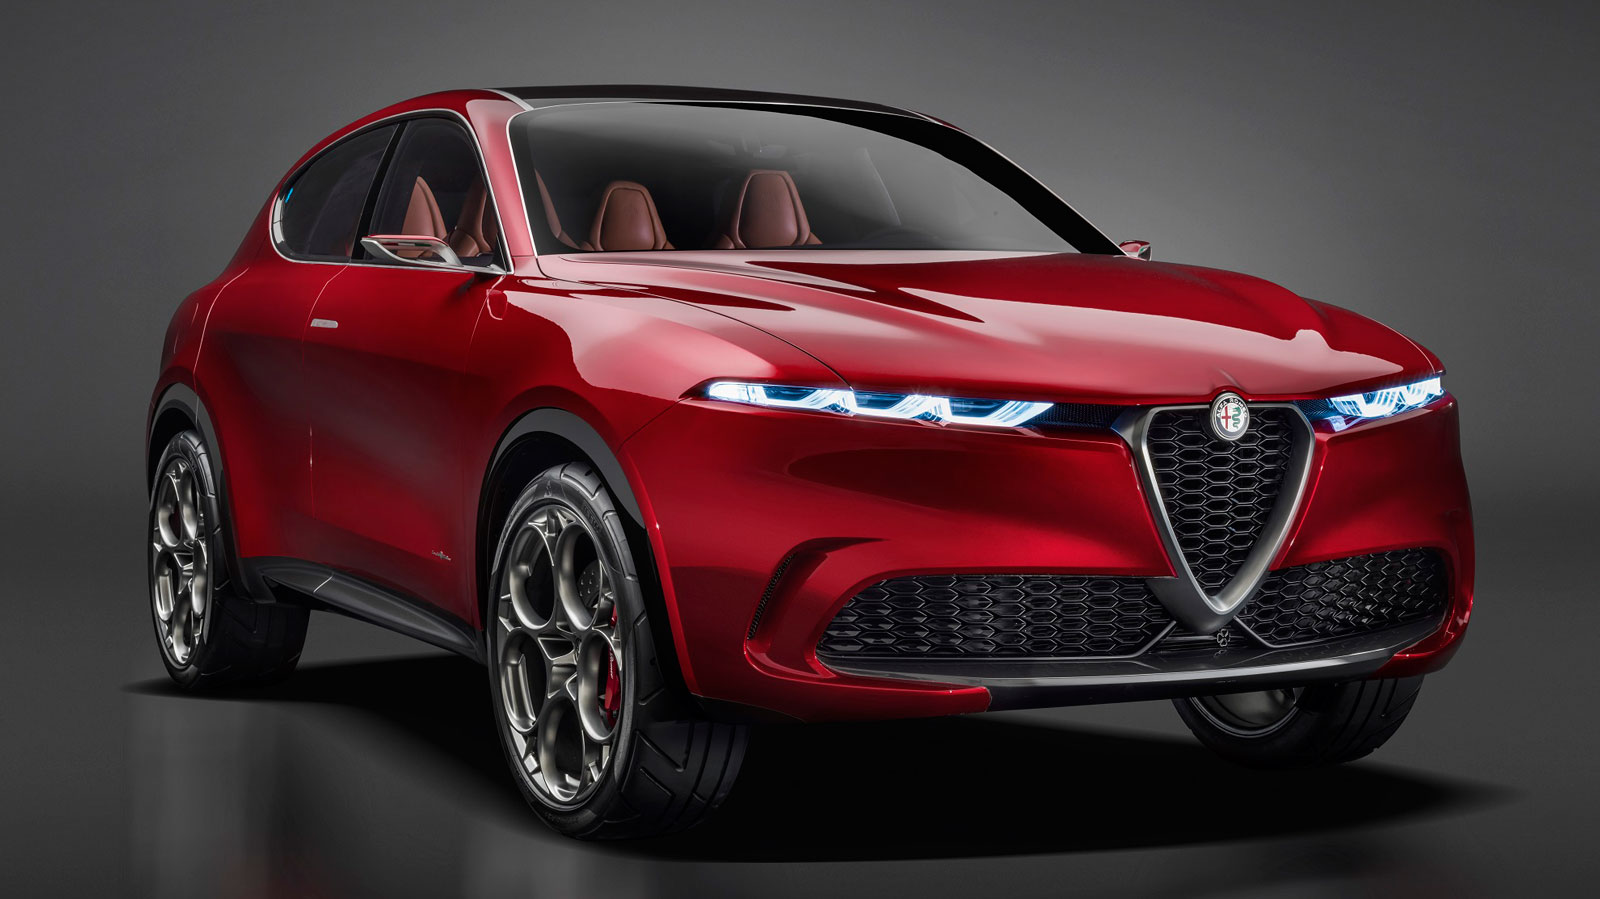 H Alfa Romeo κατακτά τα γερμανικά Motor Klassik Awards